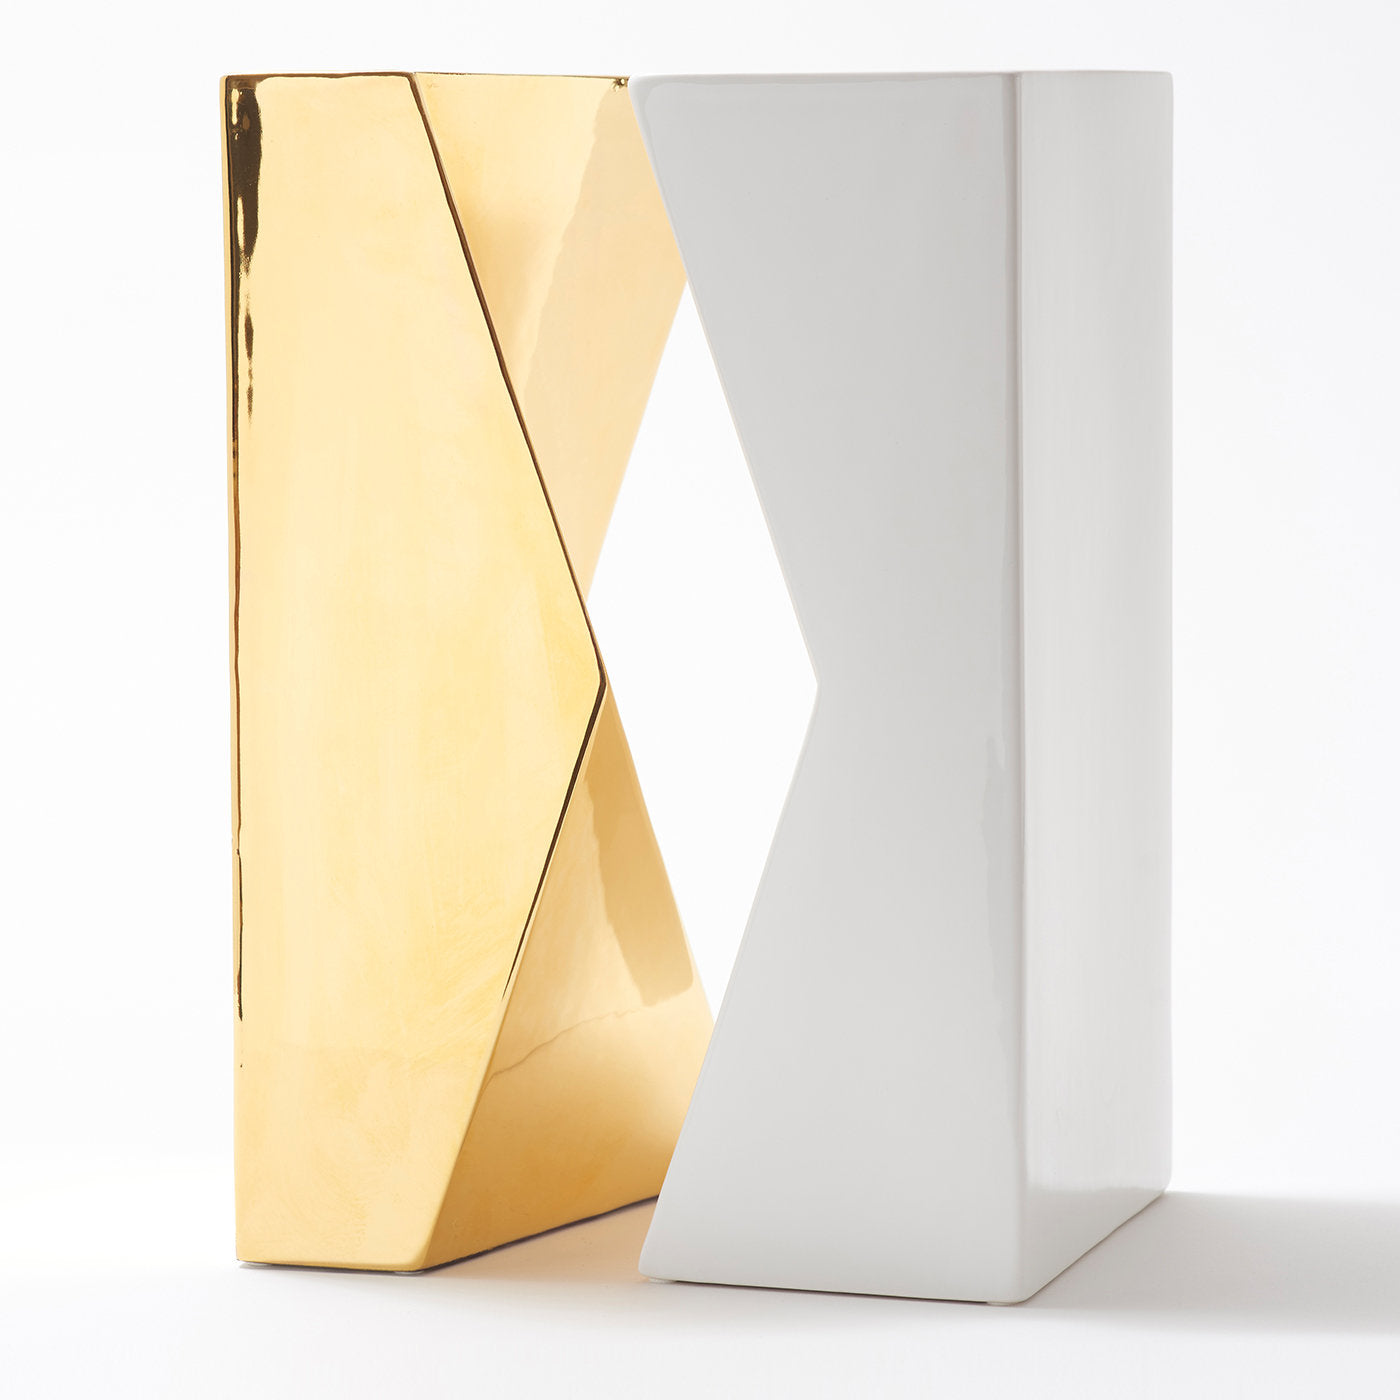 Verso Set of 2 Gold and White Vases by Antonio Saporito - Alternative view 1